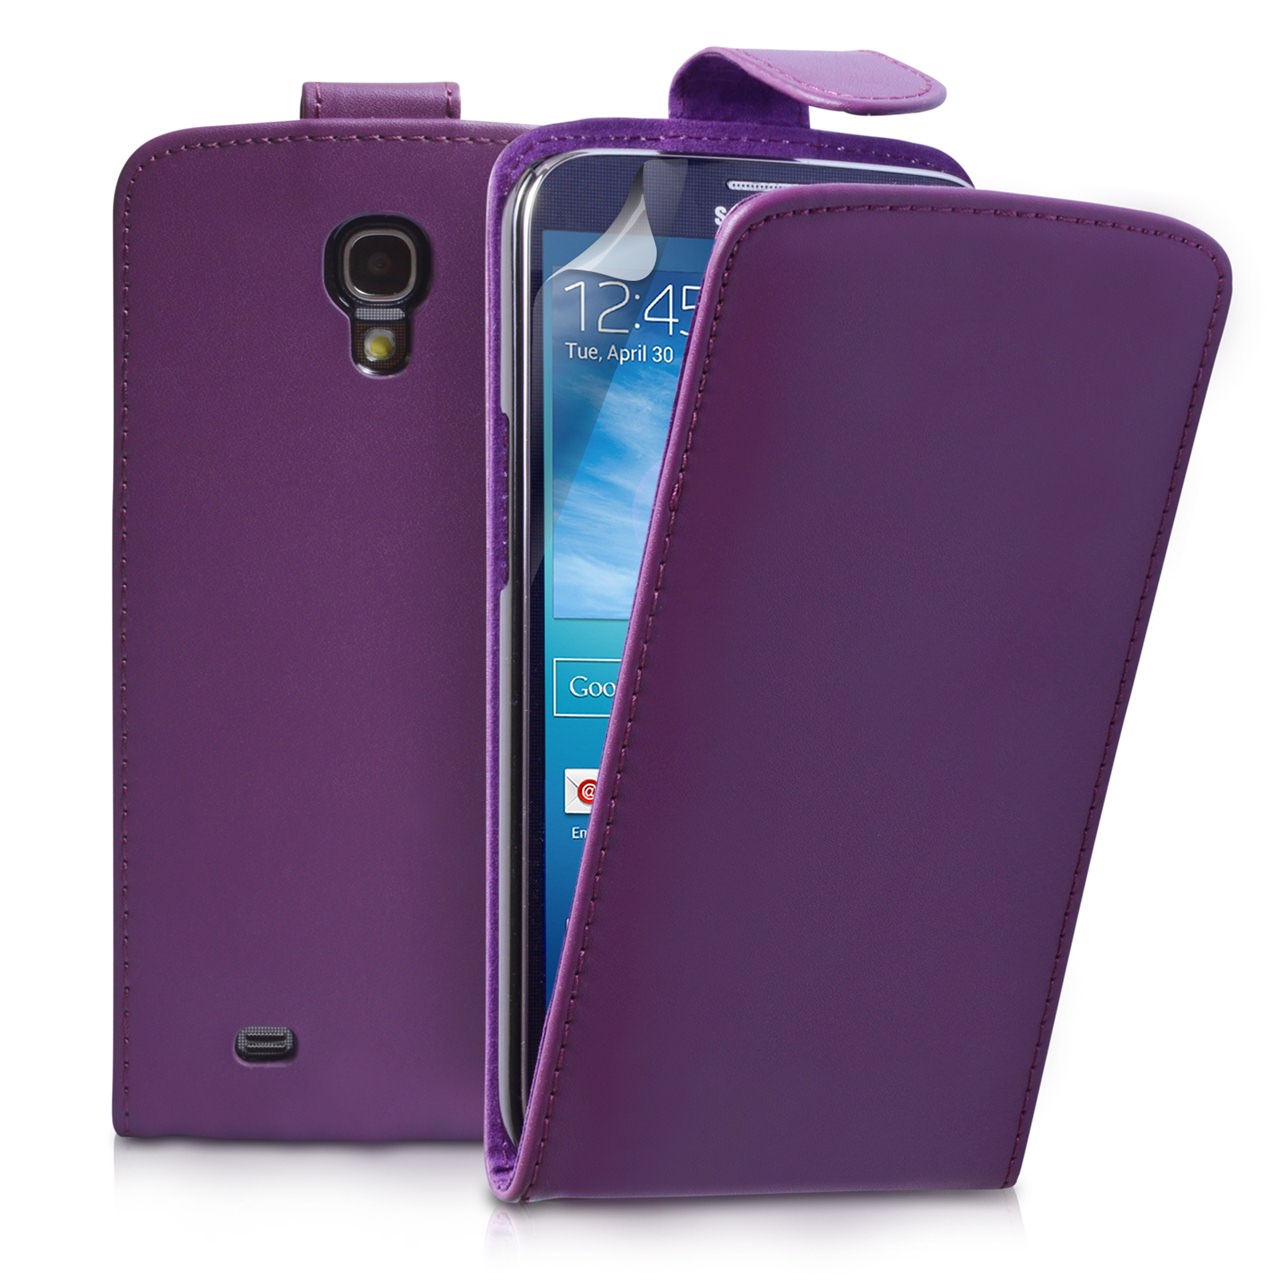 YouSave Samsung Galaxy Mega 6.3 Leather Effect Flip Case - Purple